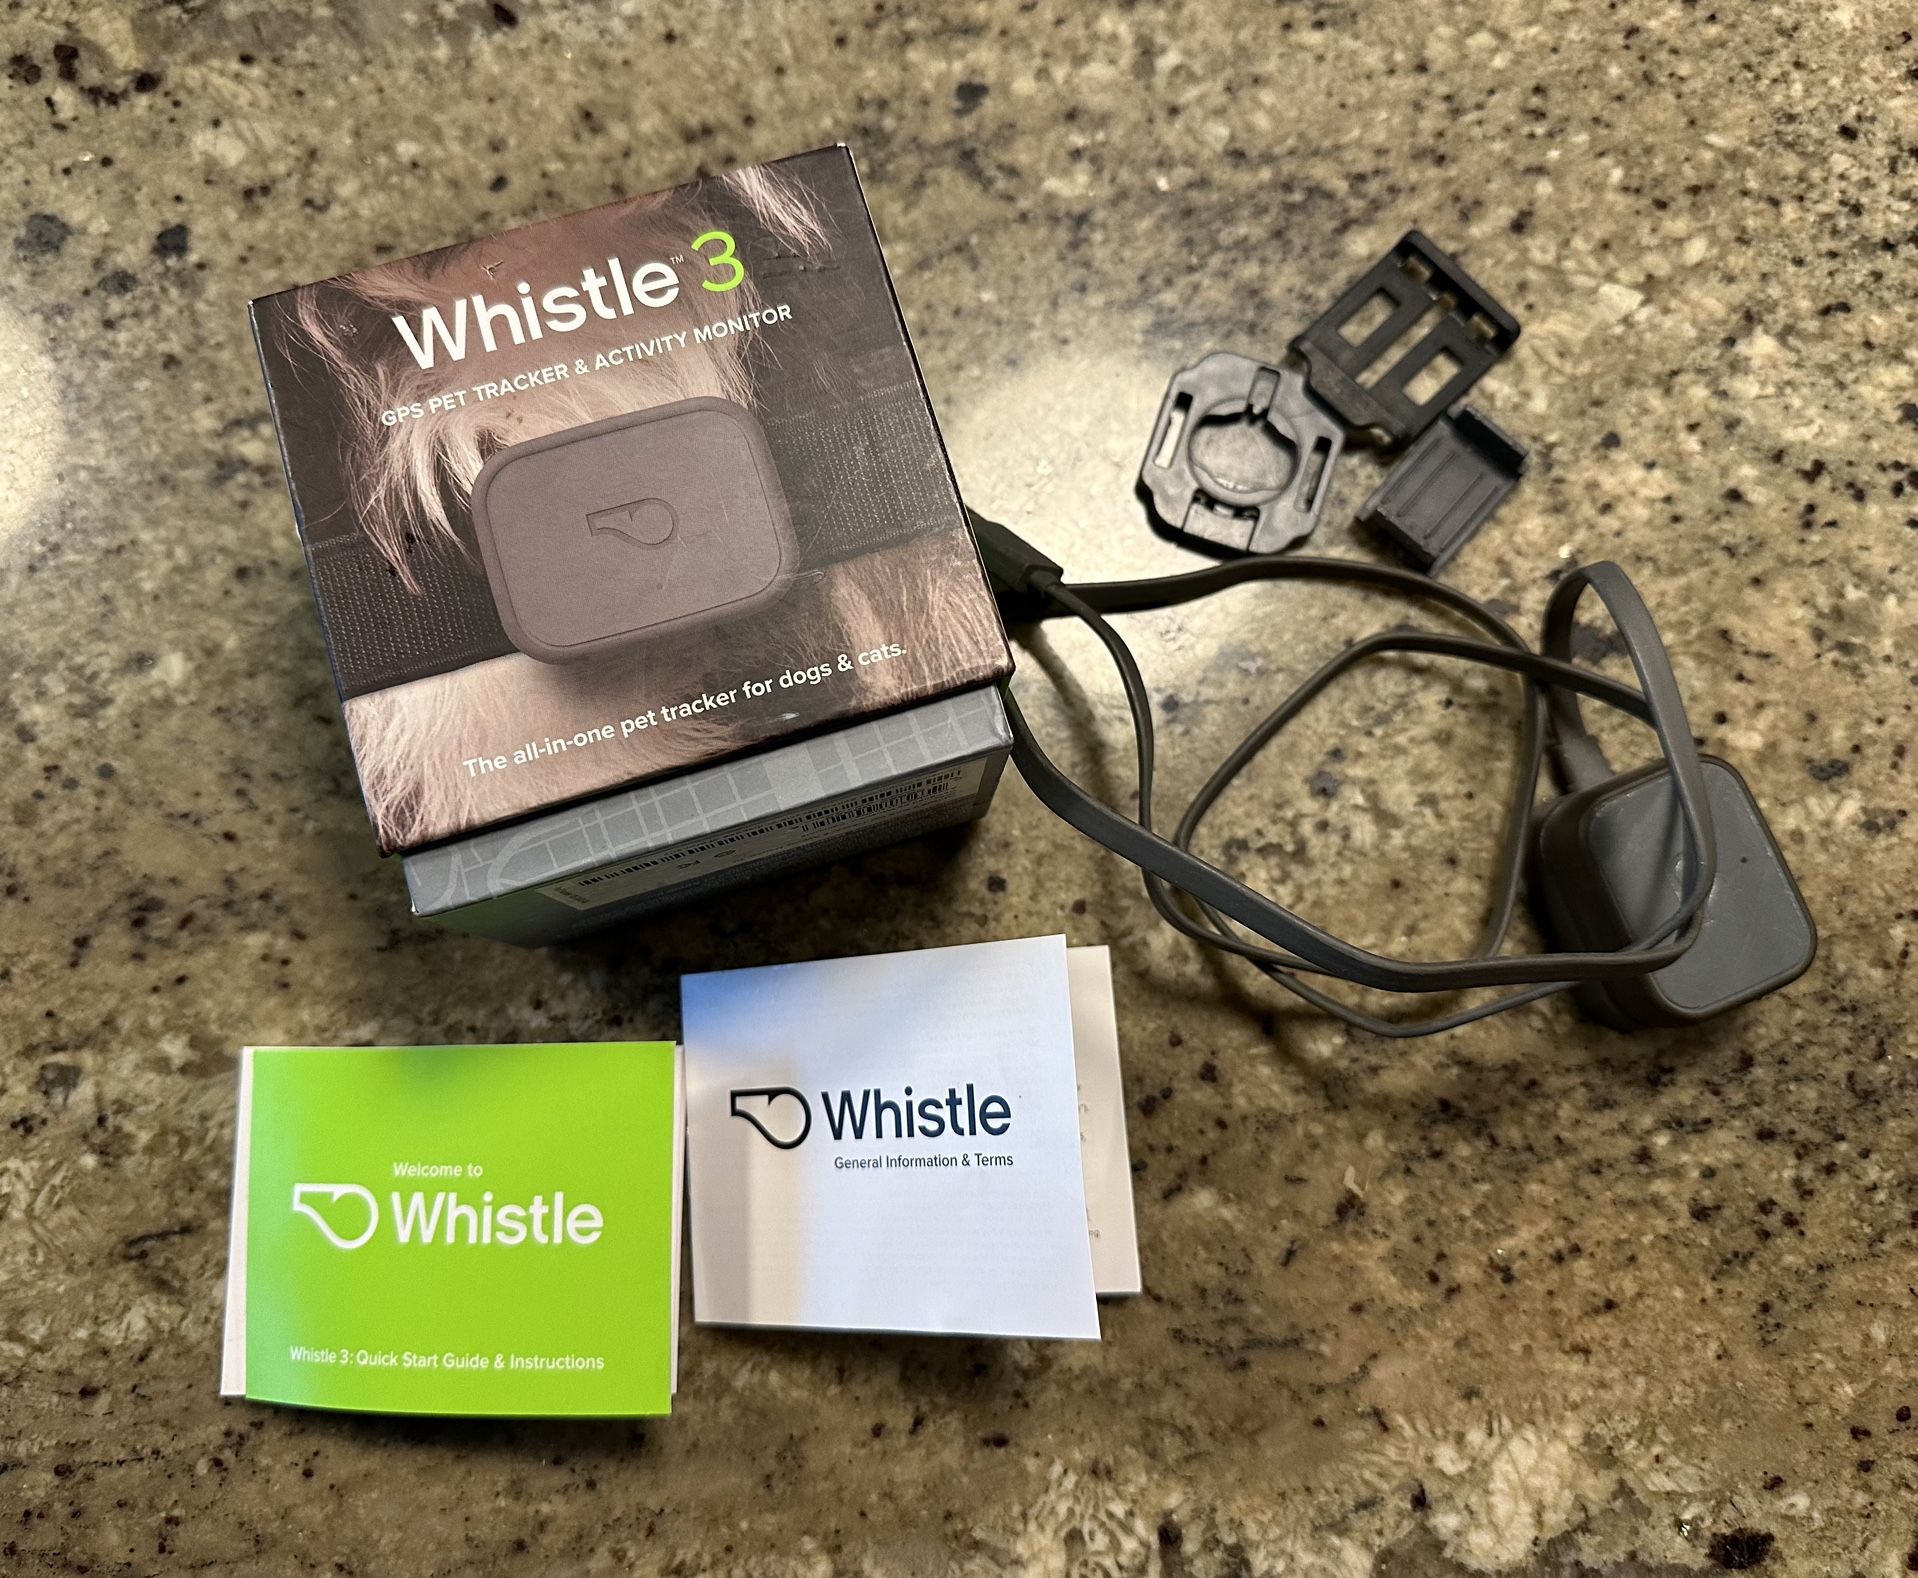 Whistle 3 Pet Tracker